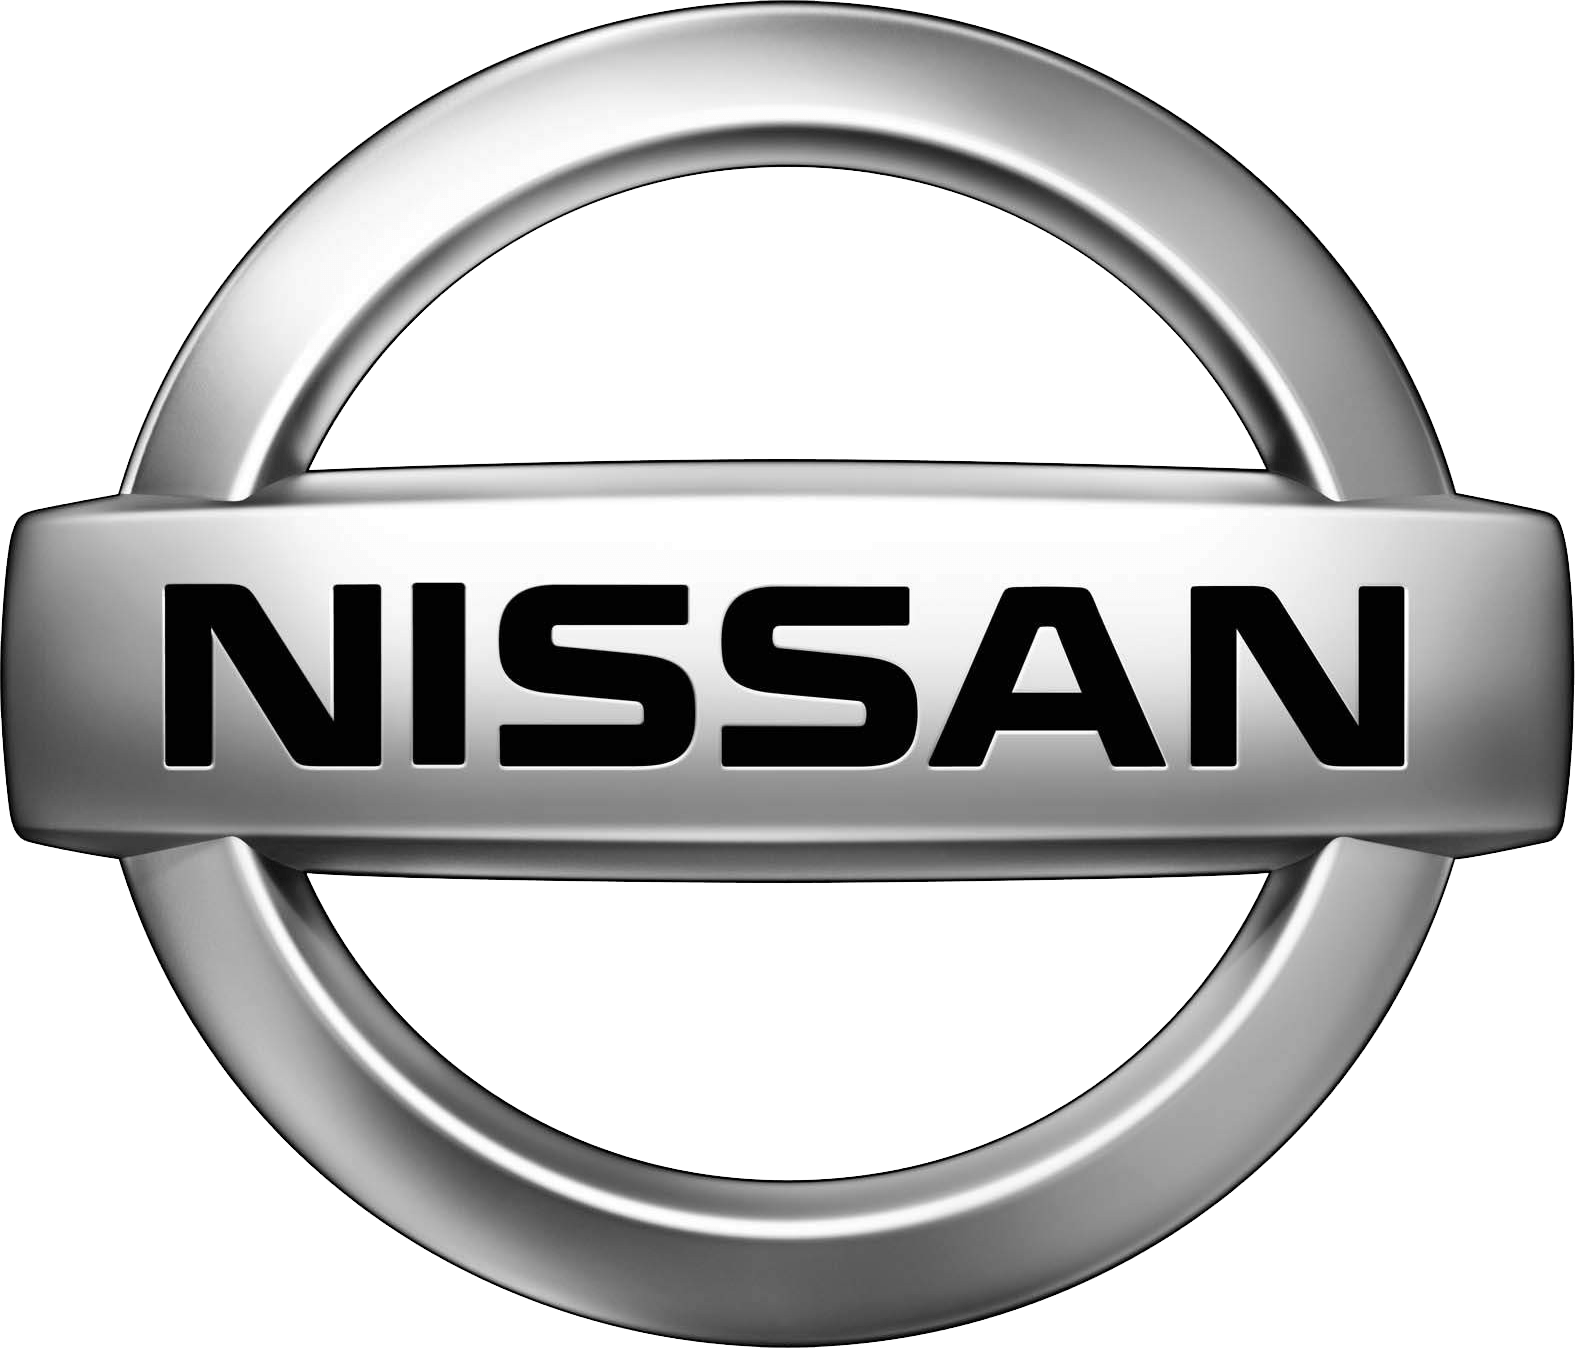 Nissan Car Logo Png Brand Image PNG Image